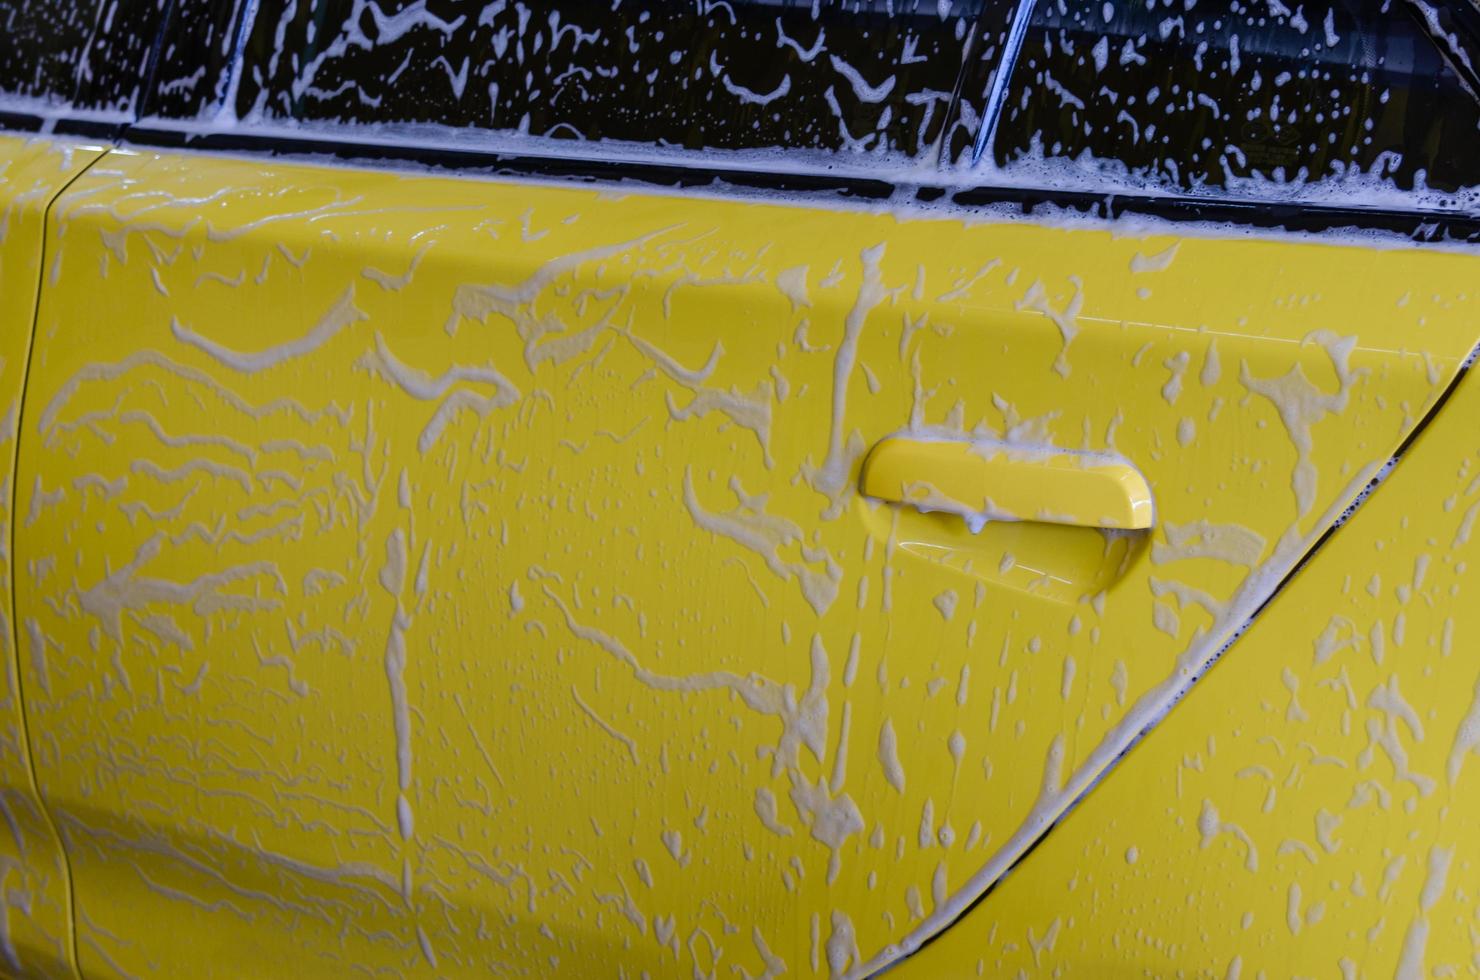 carro amarelo sendo lavado foto